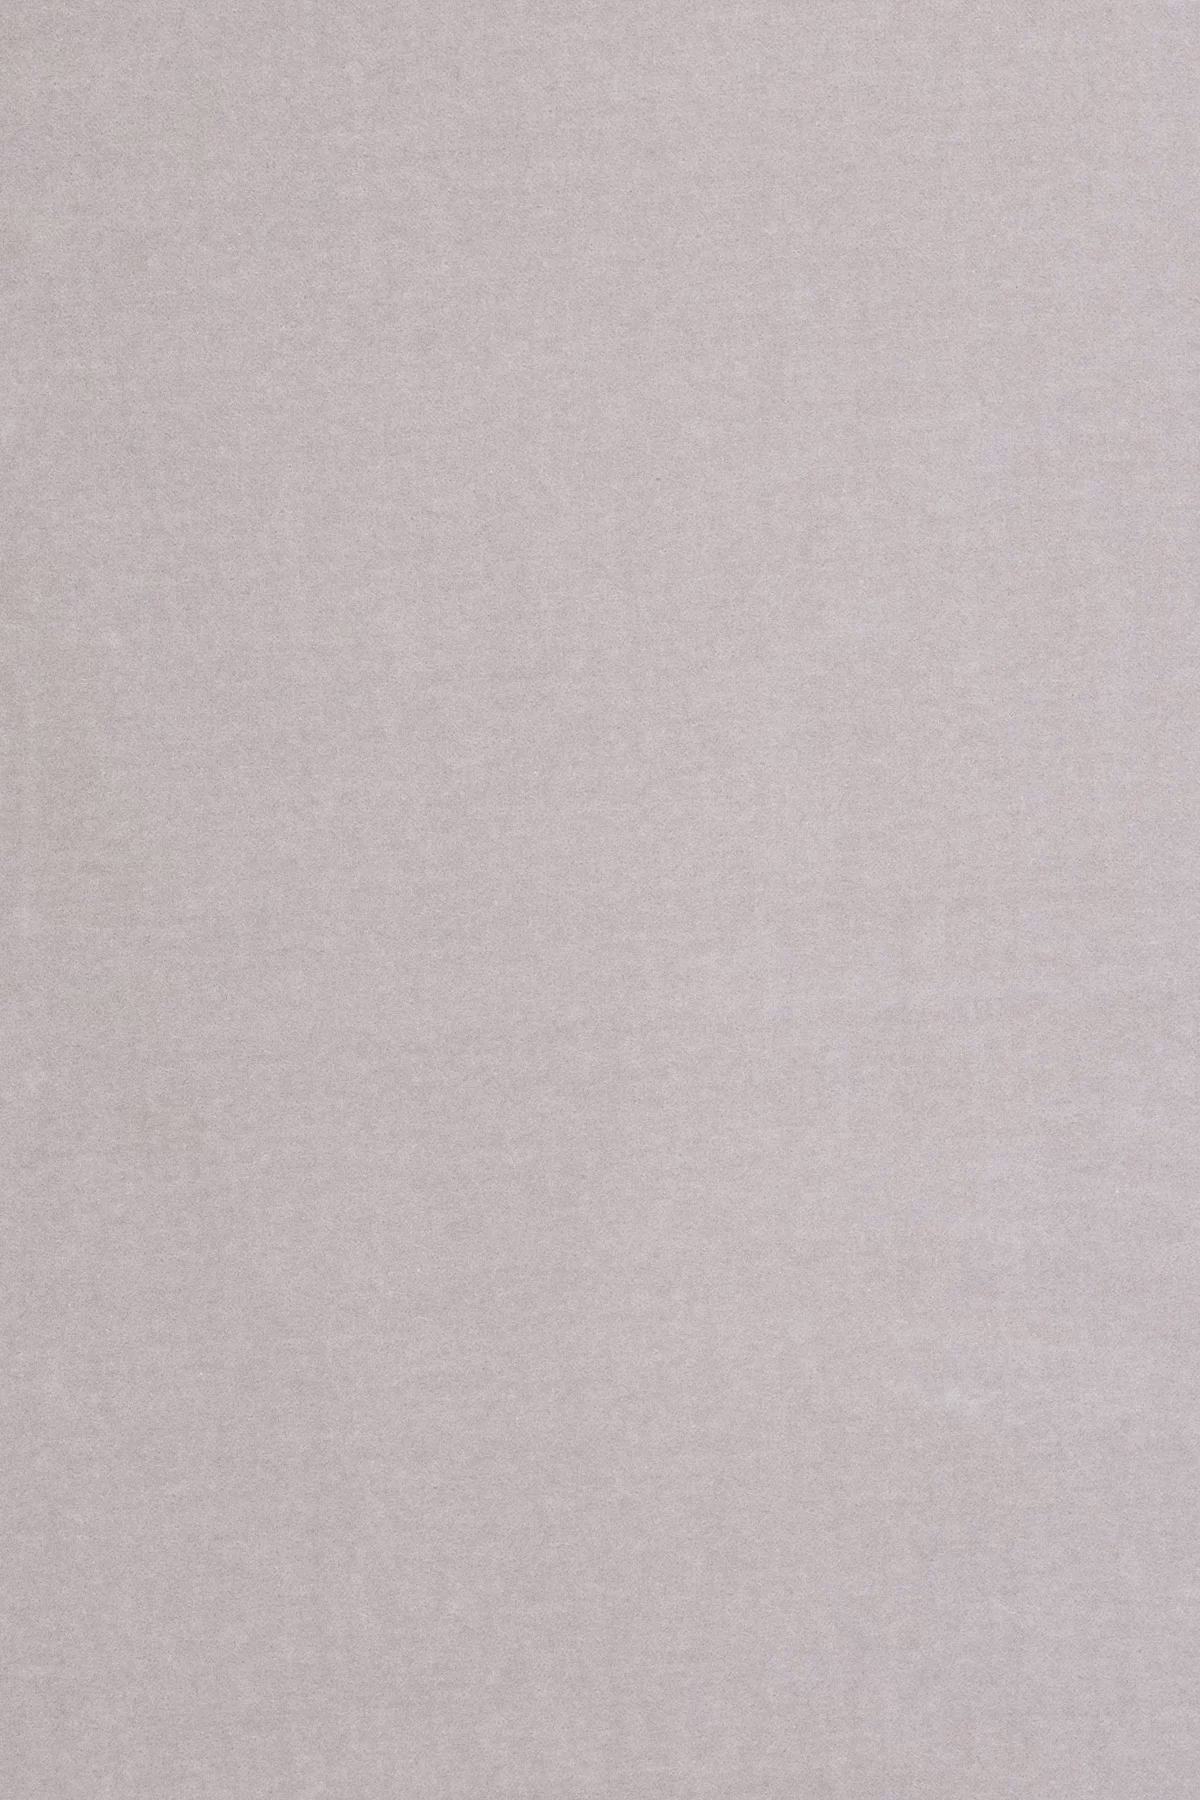 Fabric sample Harald 3 233 grey